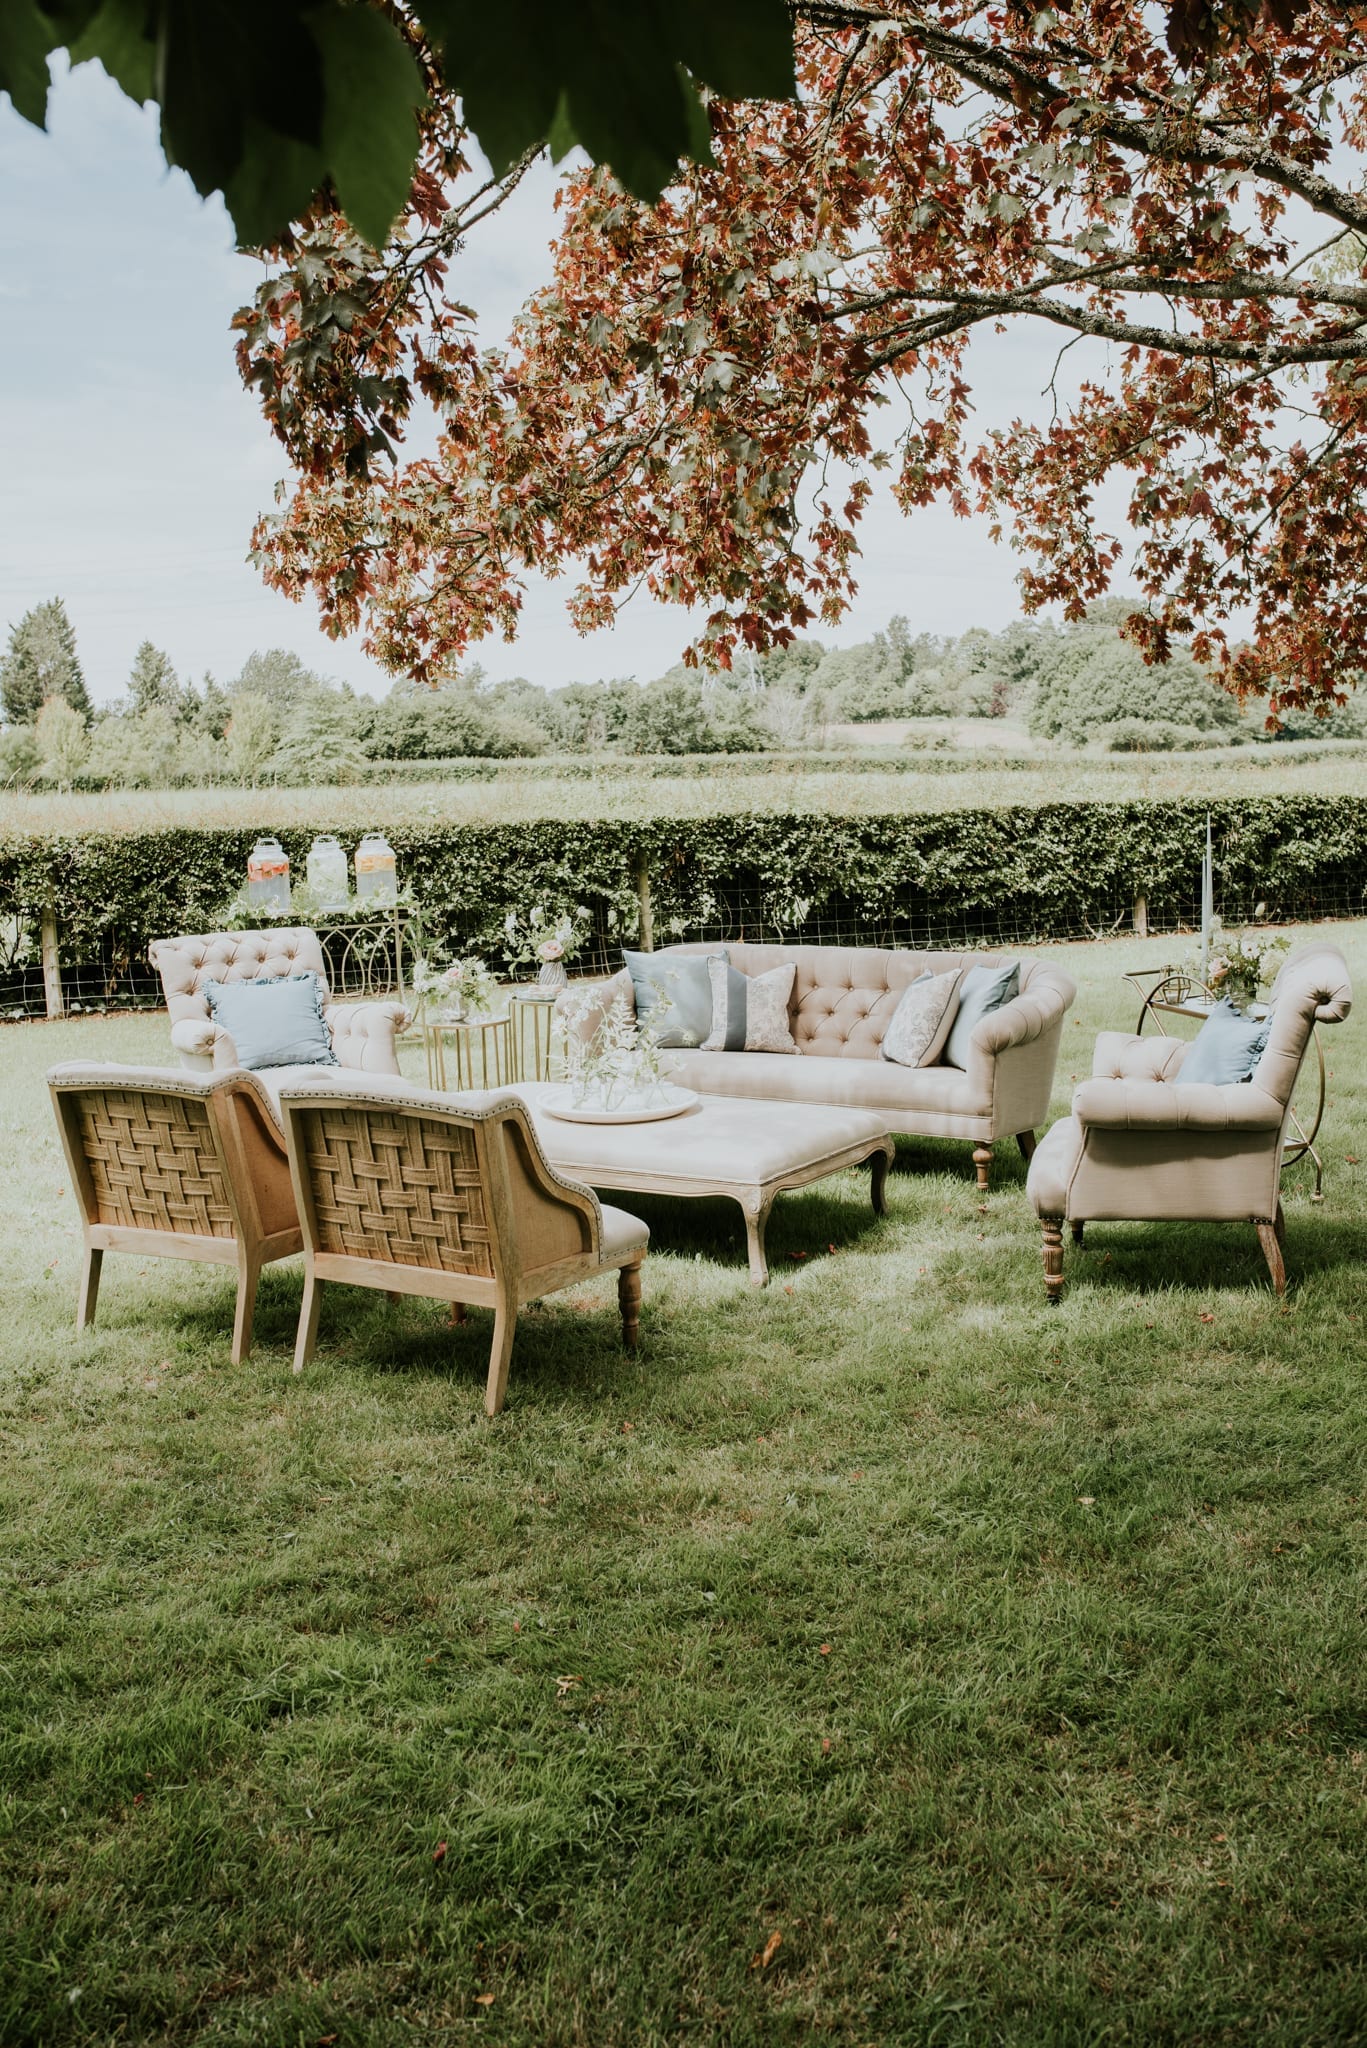 English country garden lounge wedding setting